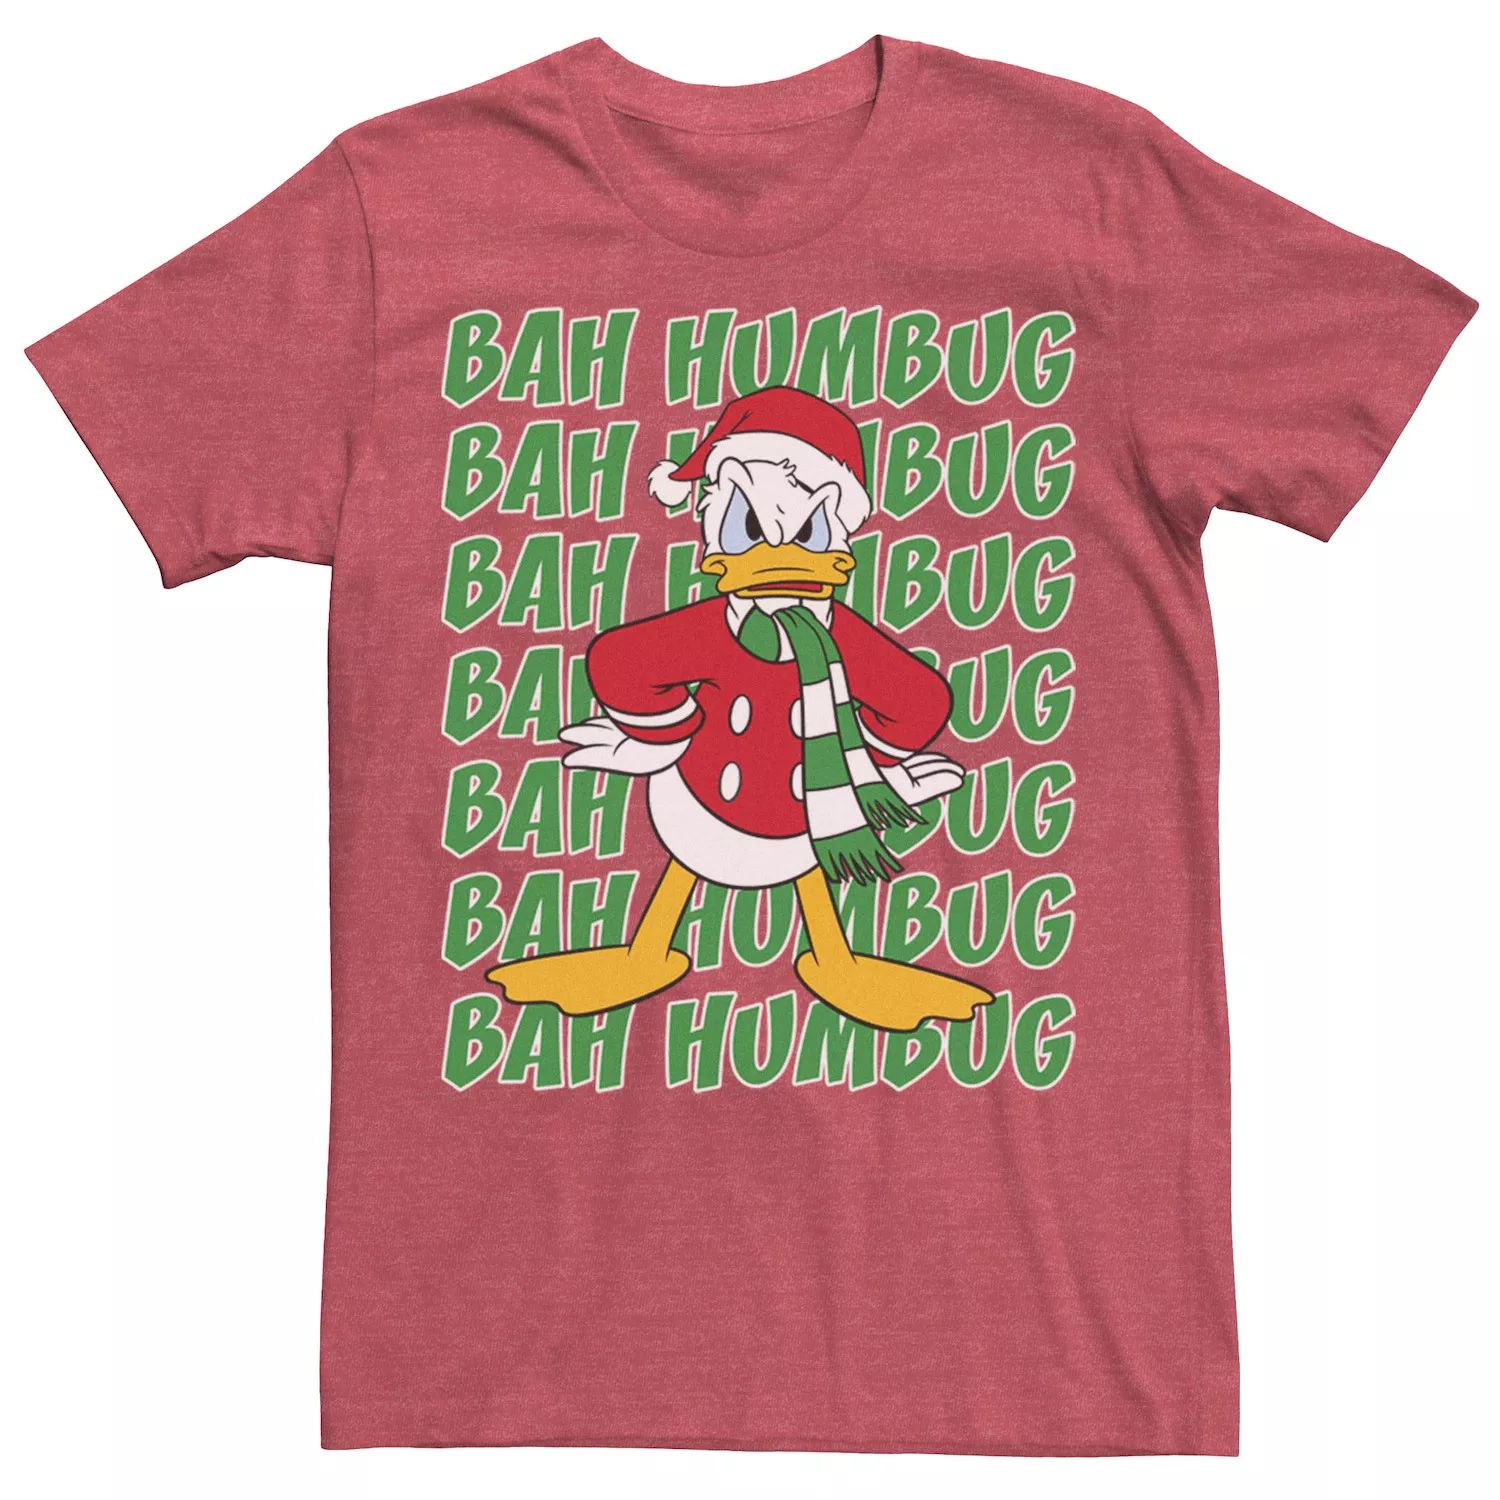 носки ripndip bah humbug Мужская футболка Donald Duck Bah Humbug с рождественским текстом Disney